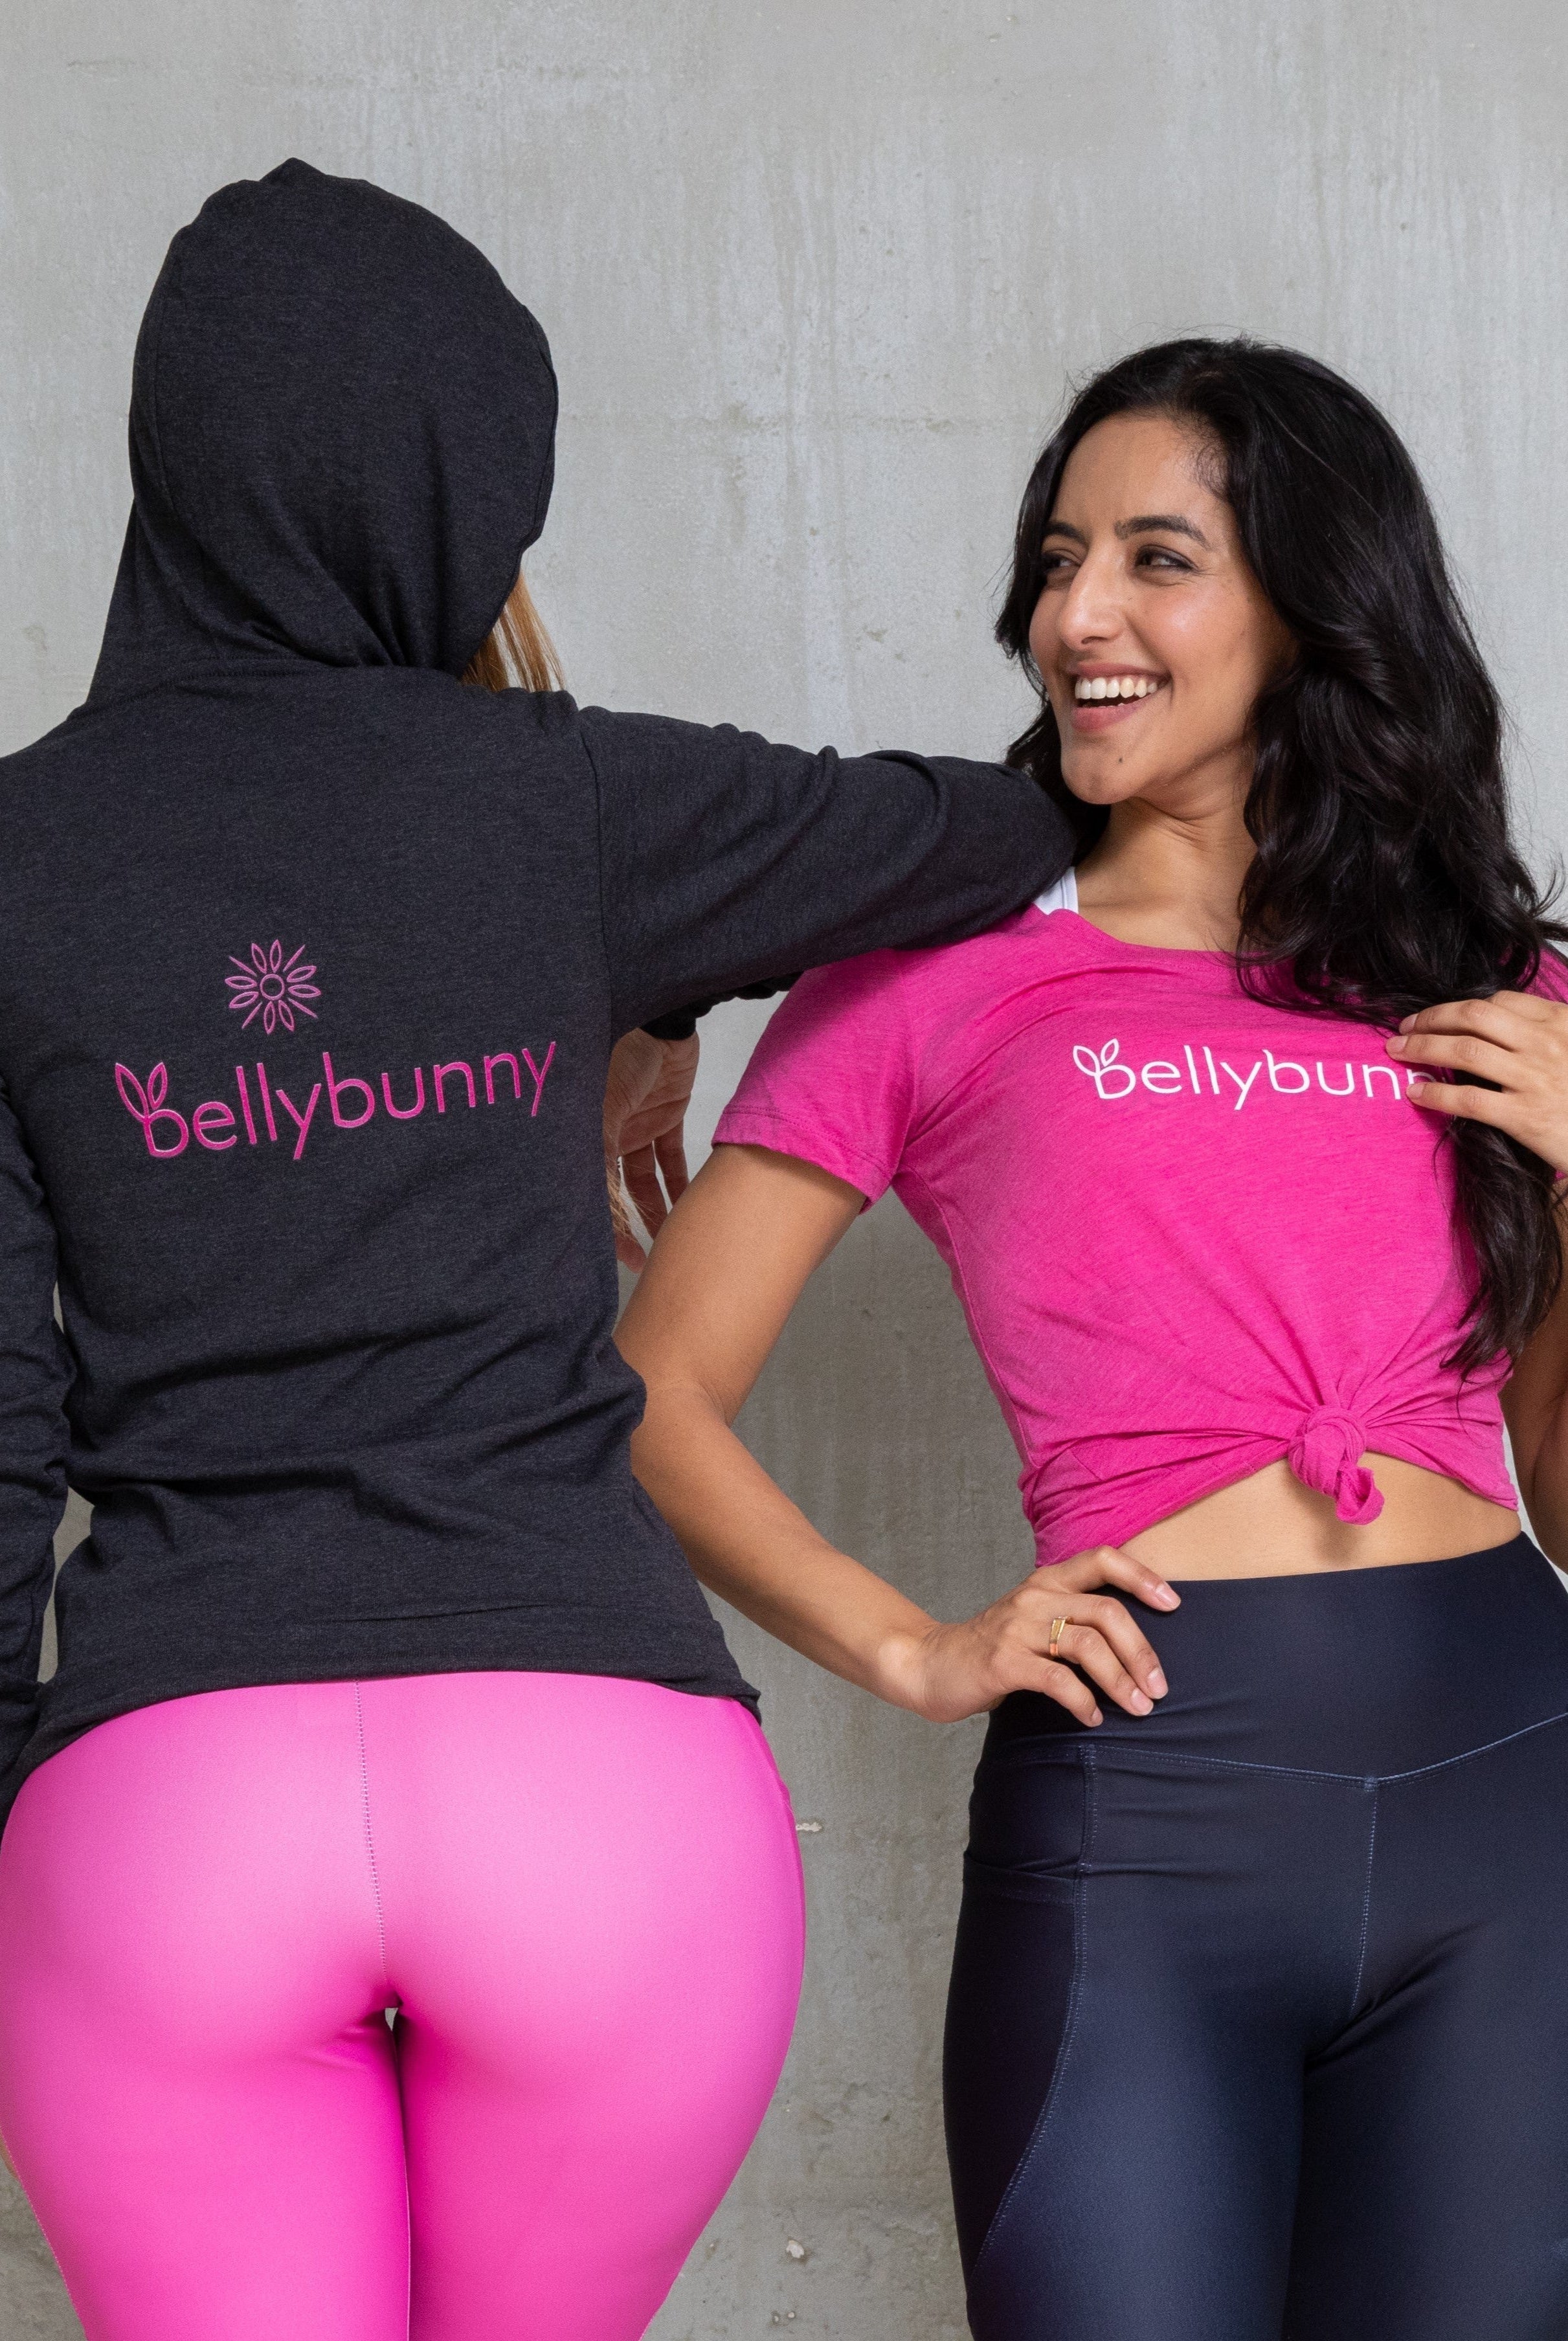 Bellybunny Activewear